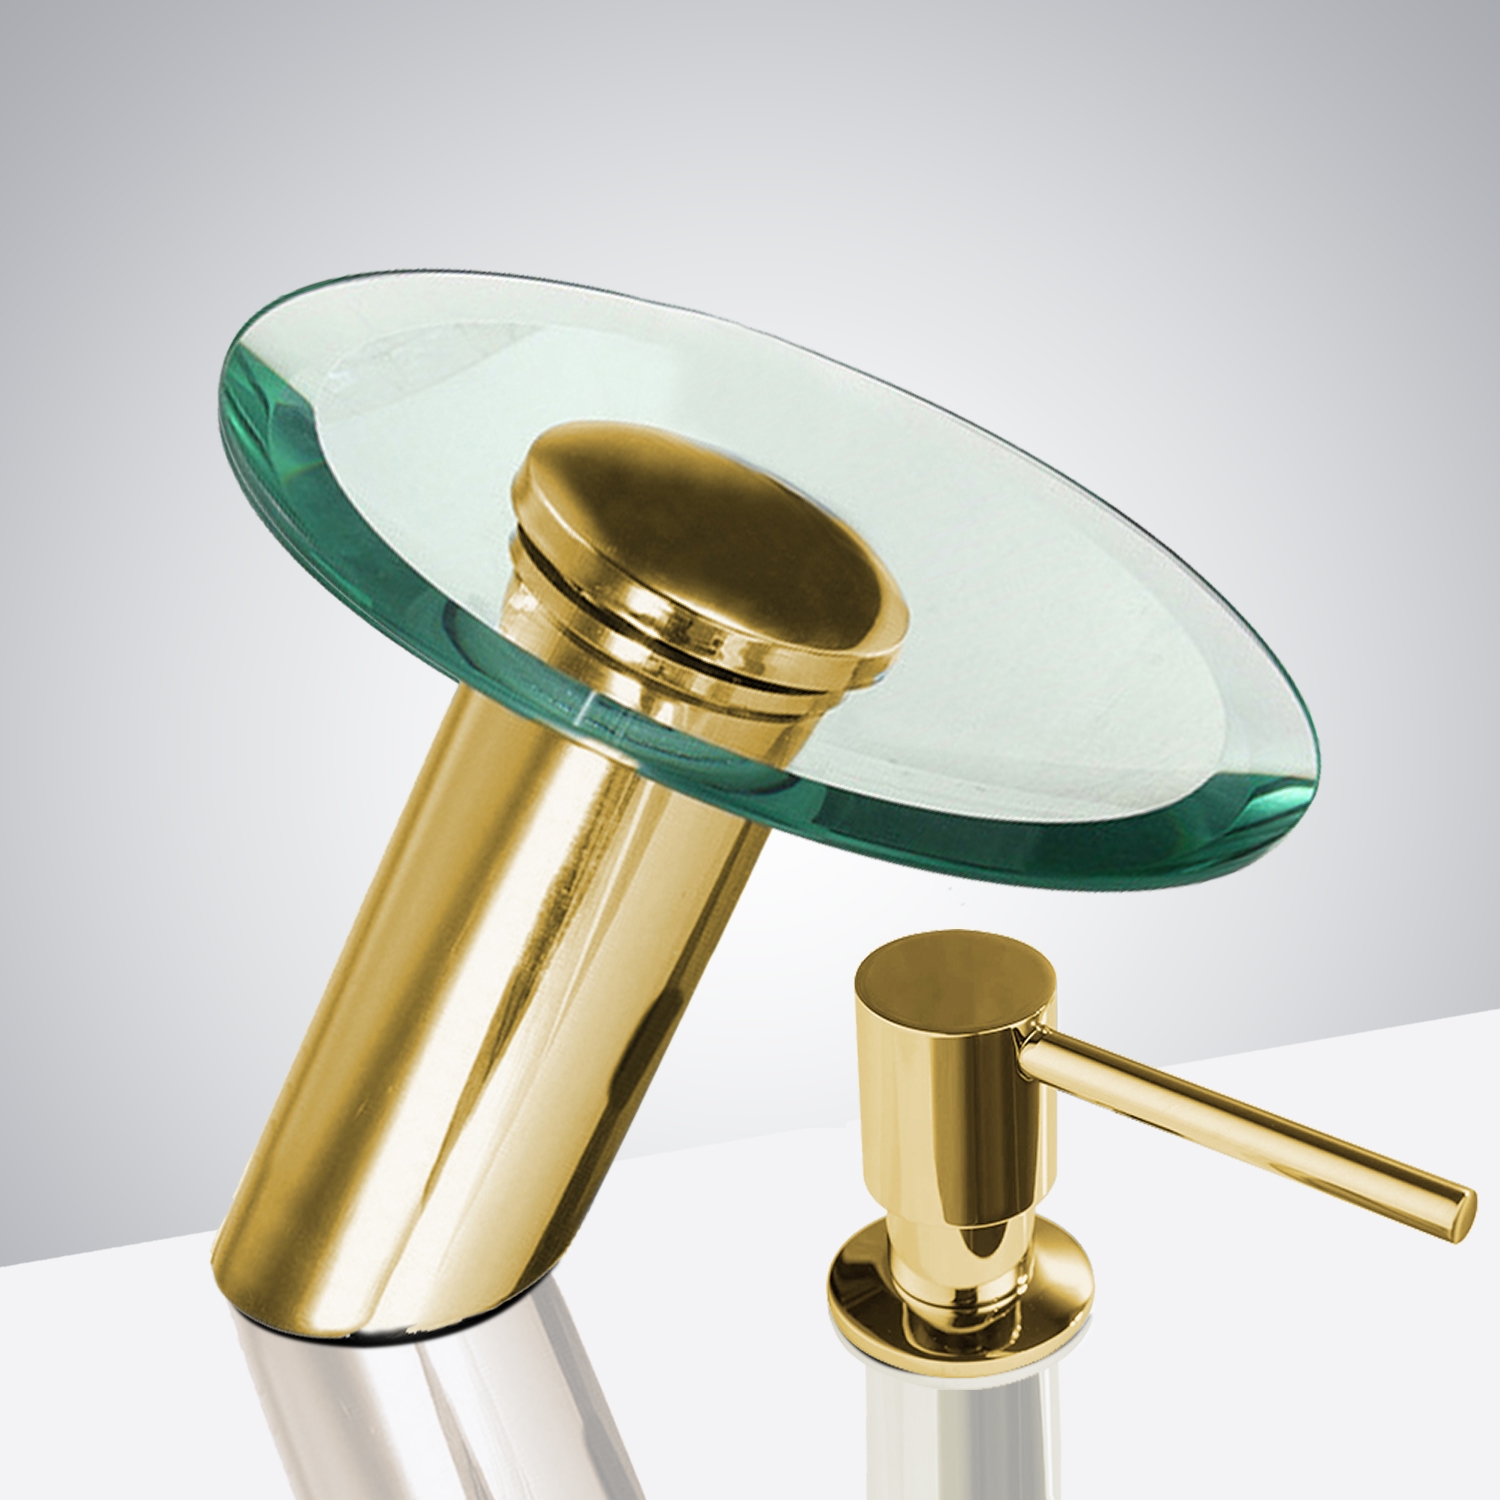 Fontana Gold Waterfall Automatic Motion Sensor Faucet with Manual Soap Dispenser